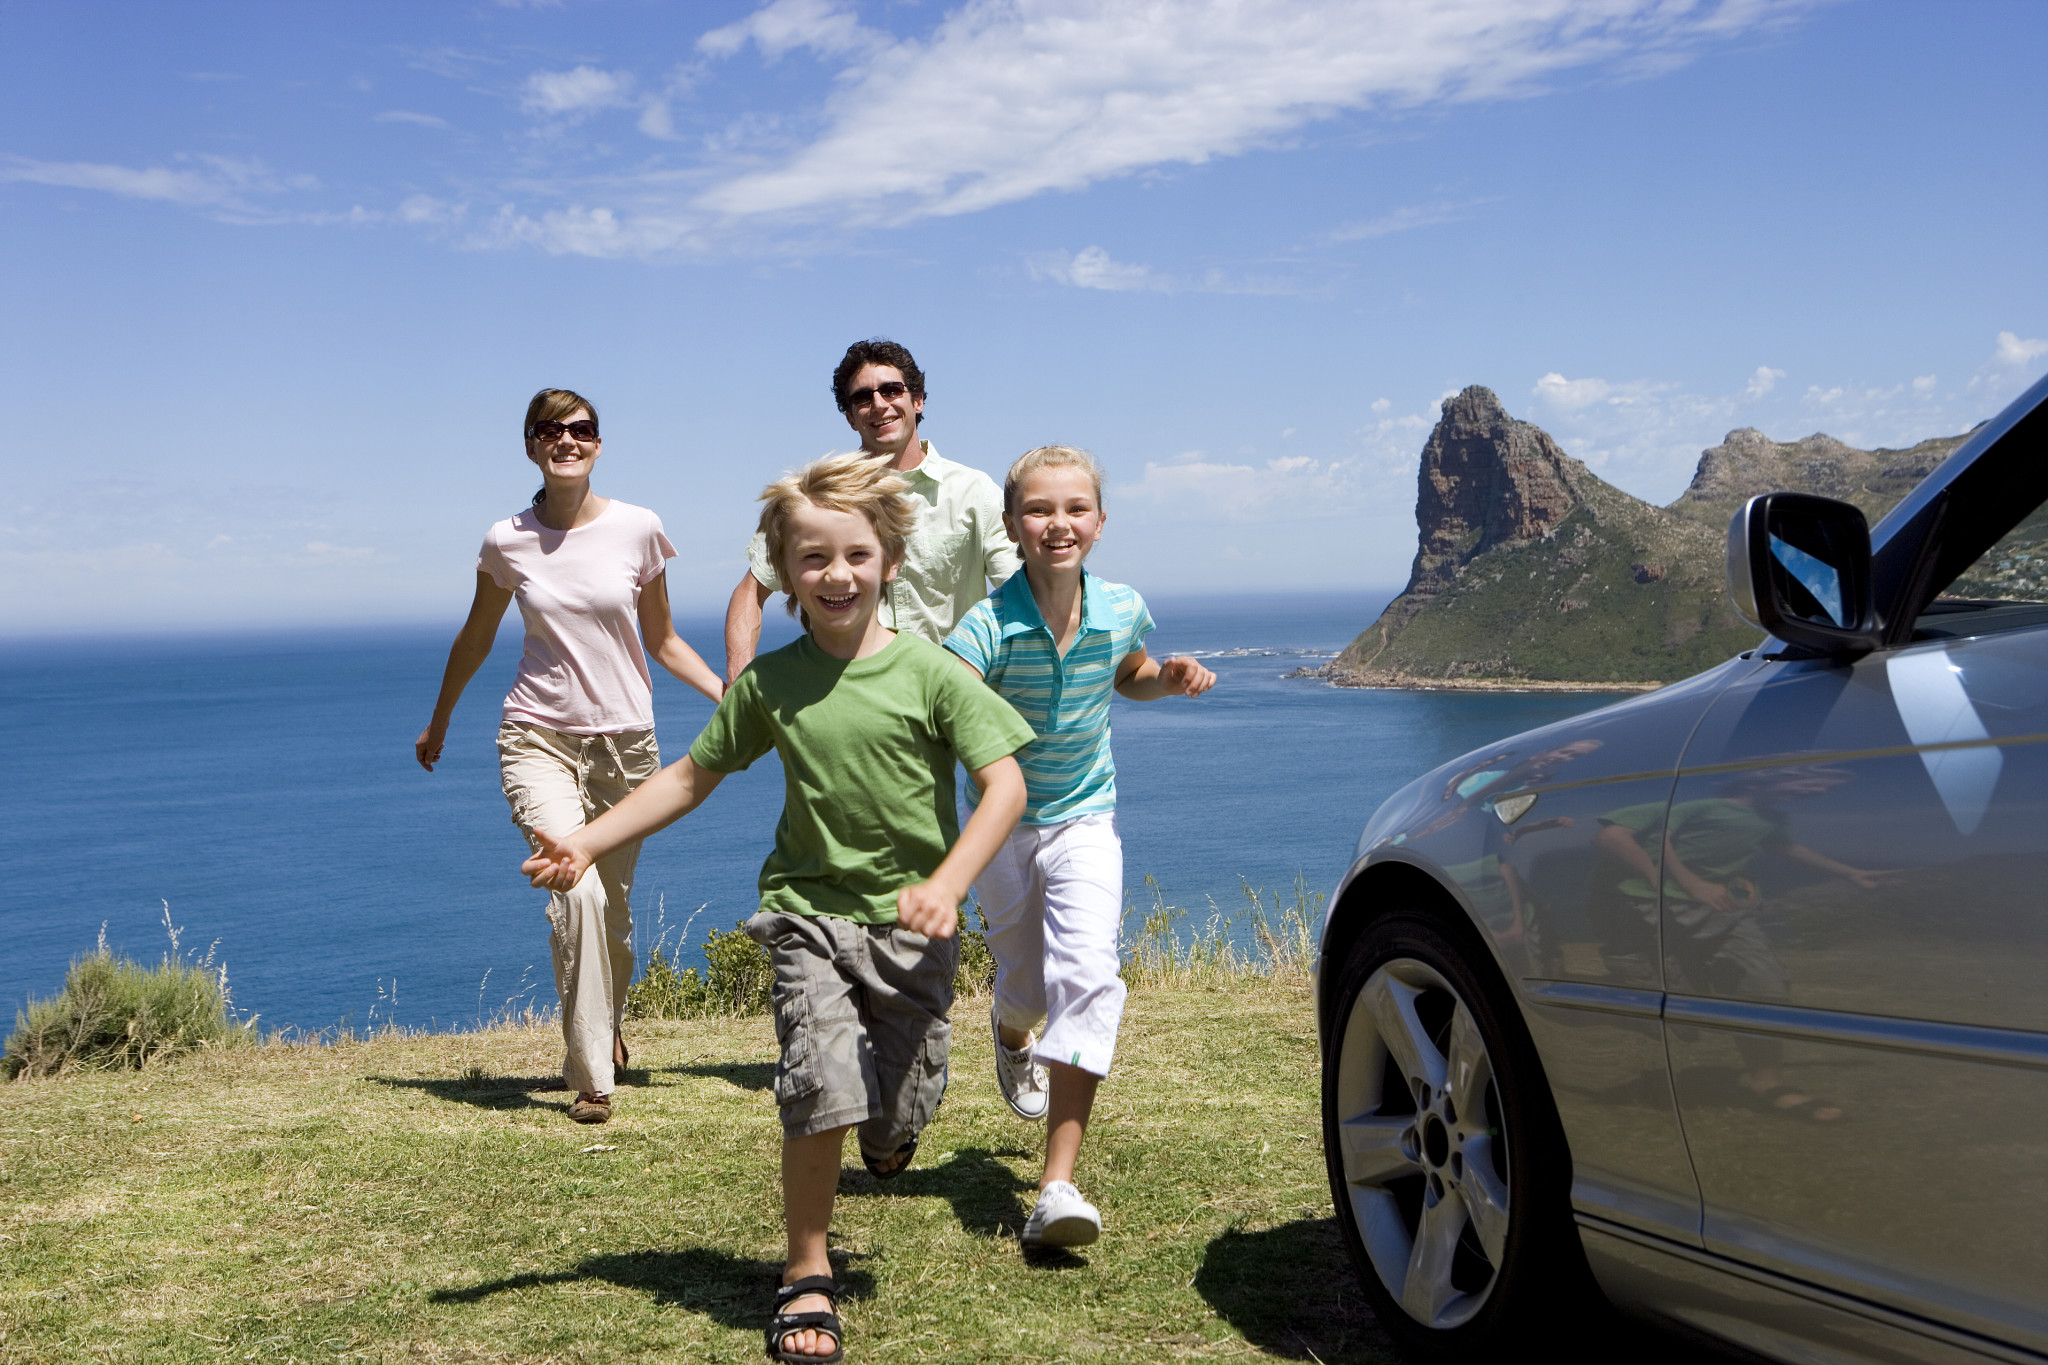 Путешествие летом на машине. Путешествие с семьей. Семья путешествует. Семейная машина для путешествий. Путешествие на море с семьей.